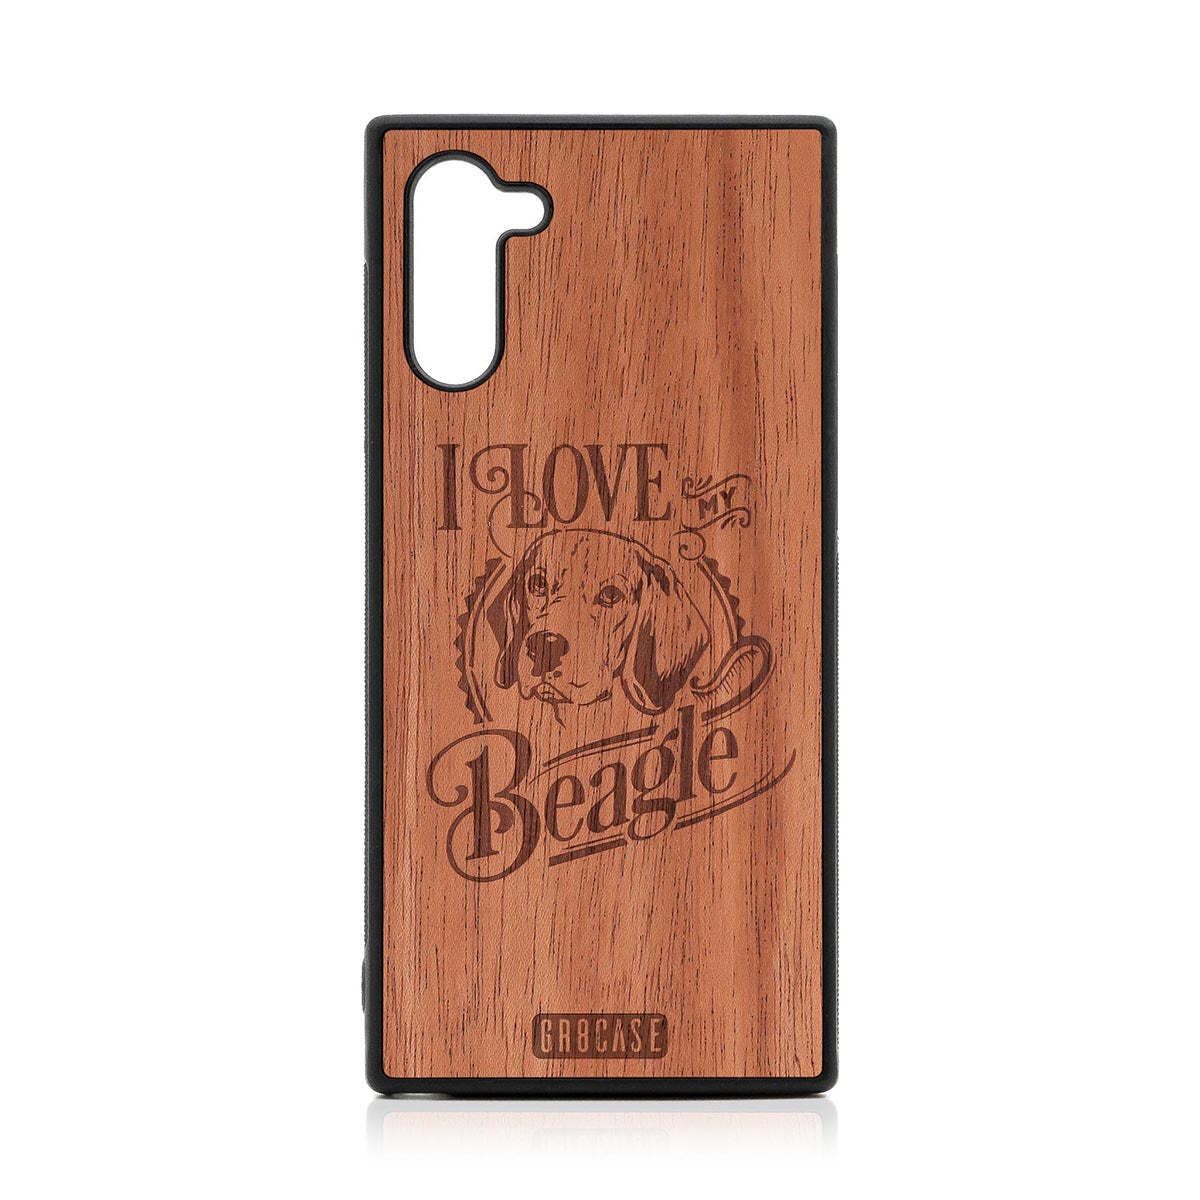 I Love My Beagle Design Wood Case Samsung Galaxy Note 10 by GR8CASE